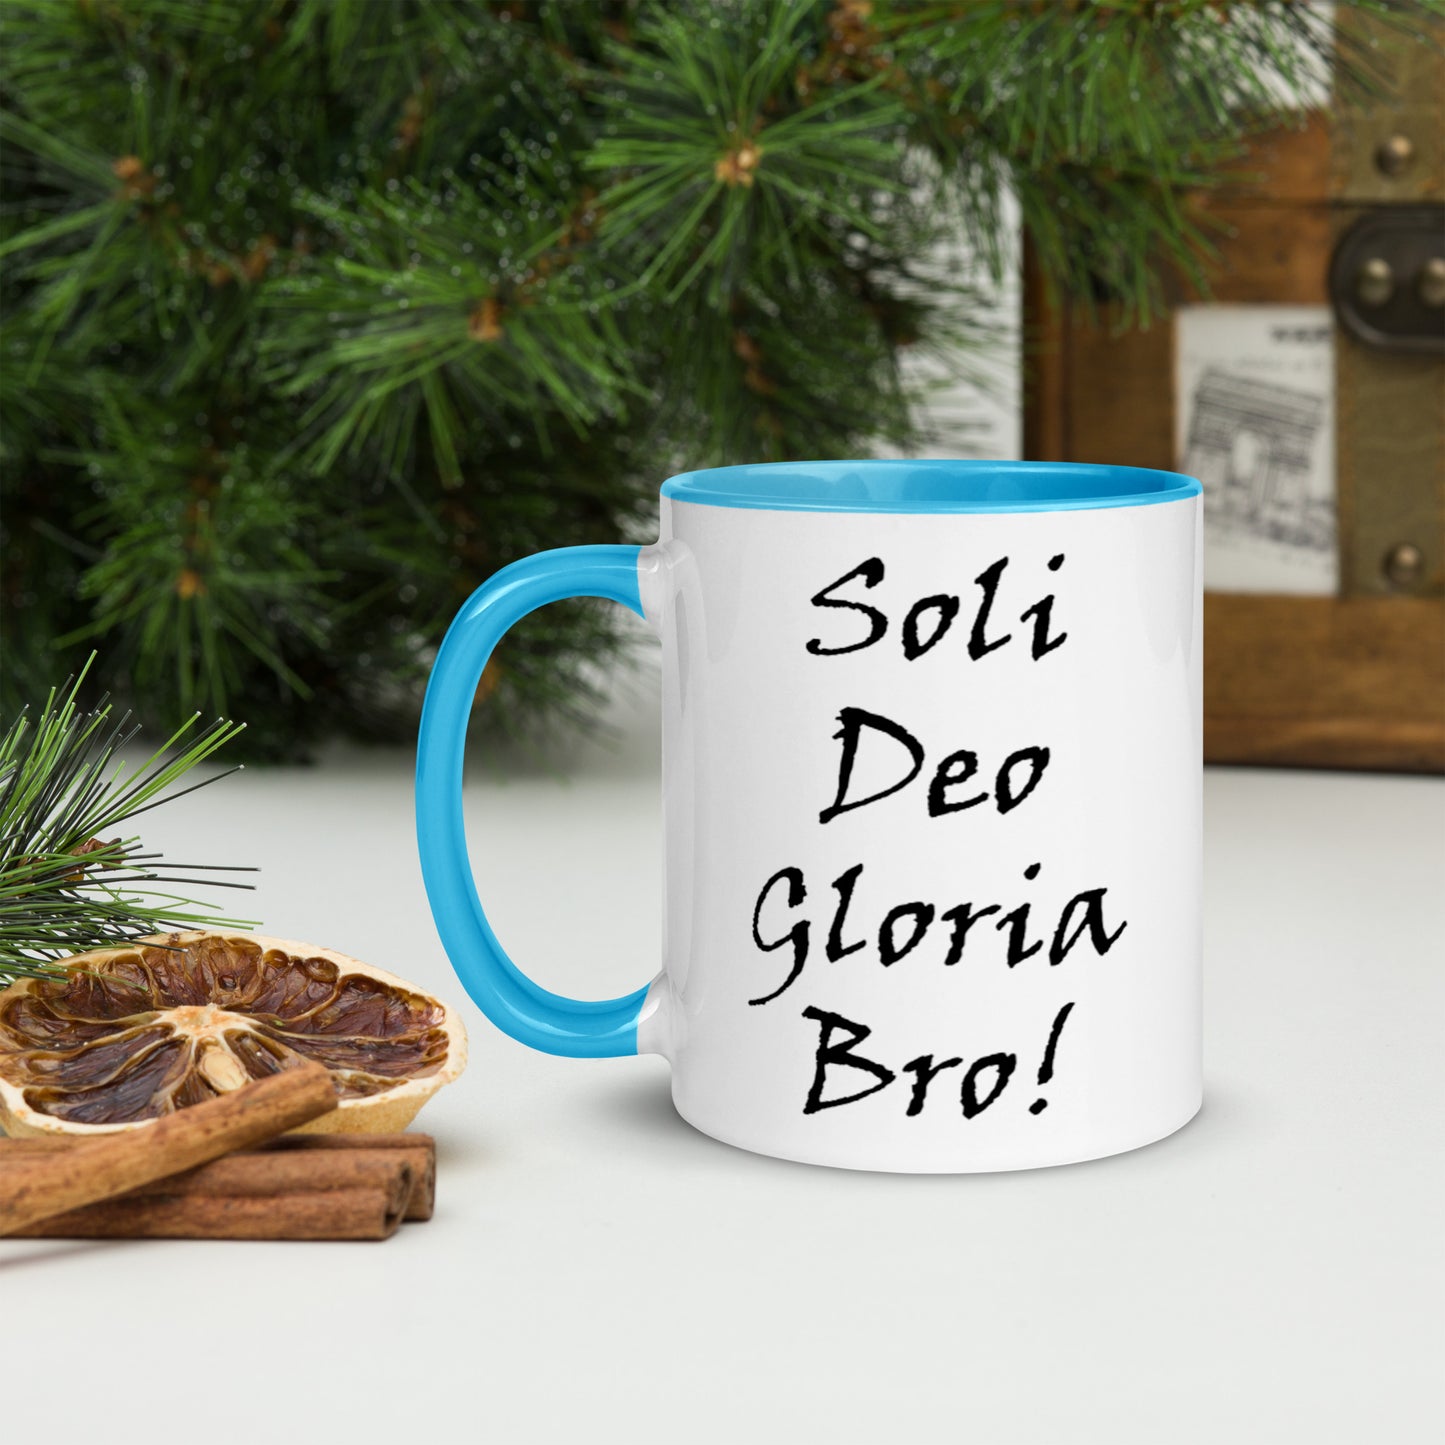 Soli Deo Gloria Bro! White Mug w/ Color - Solid Rock Designs | Christian Apparel